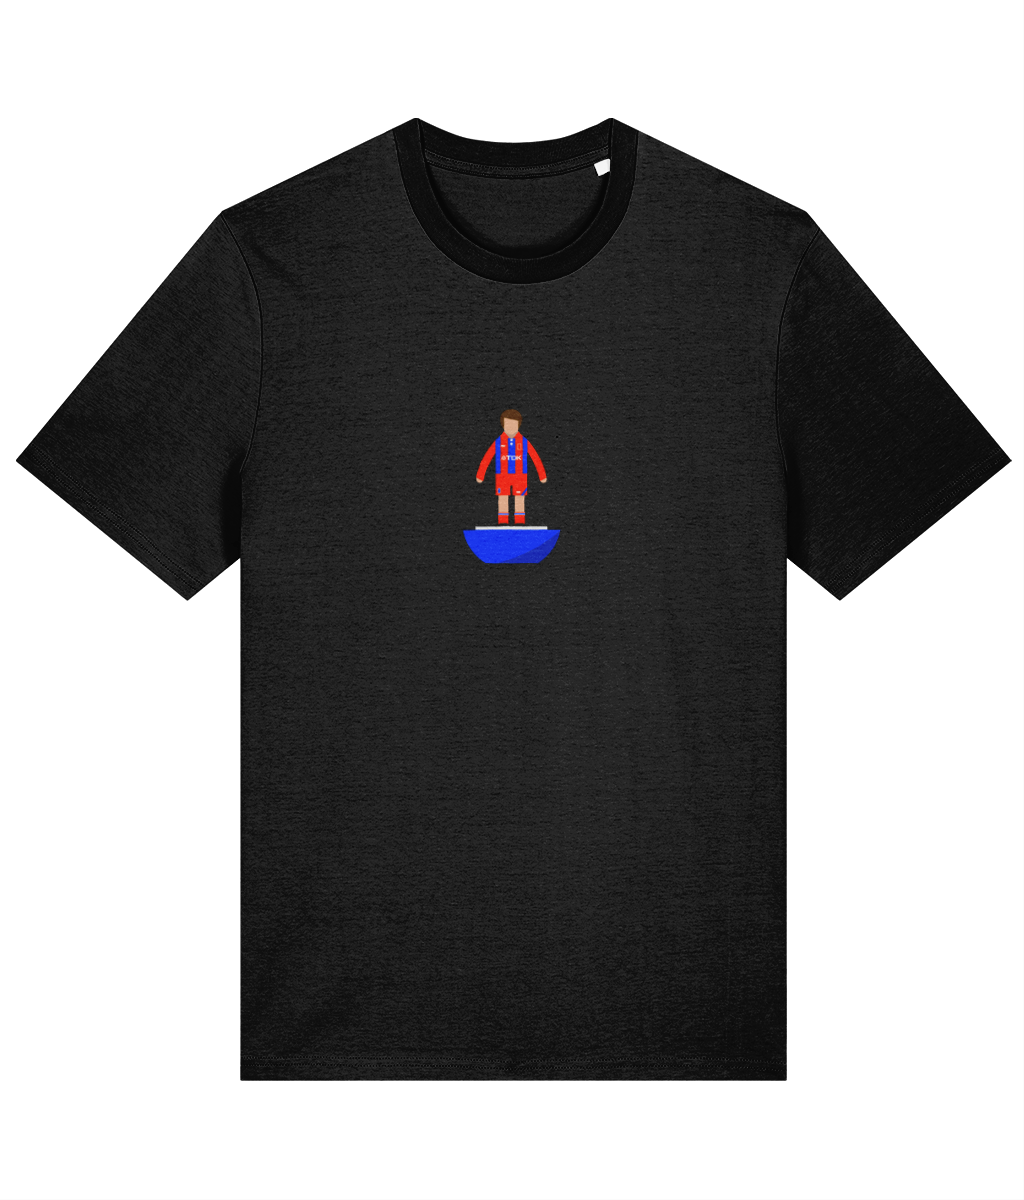 Football Player 'Crystal Palace 1994' Unisex T-Shirt